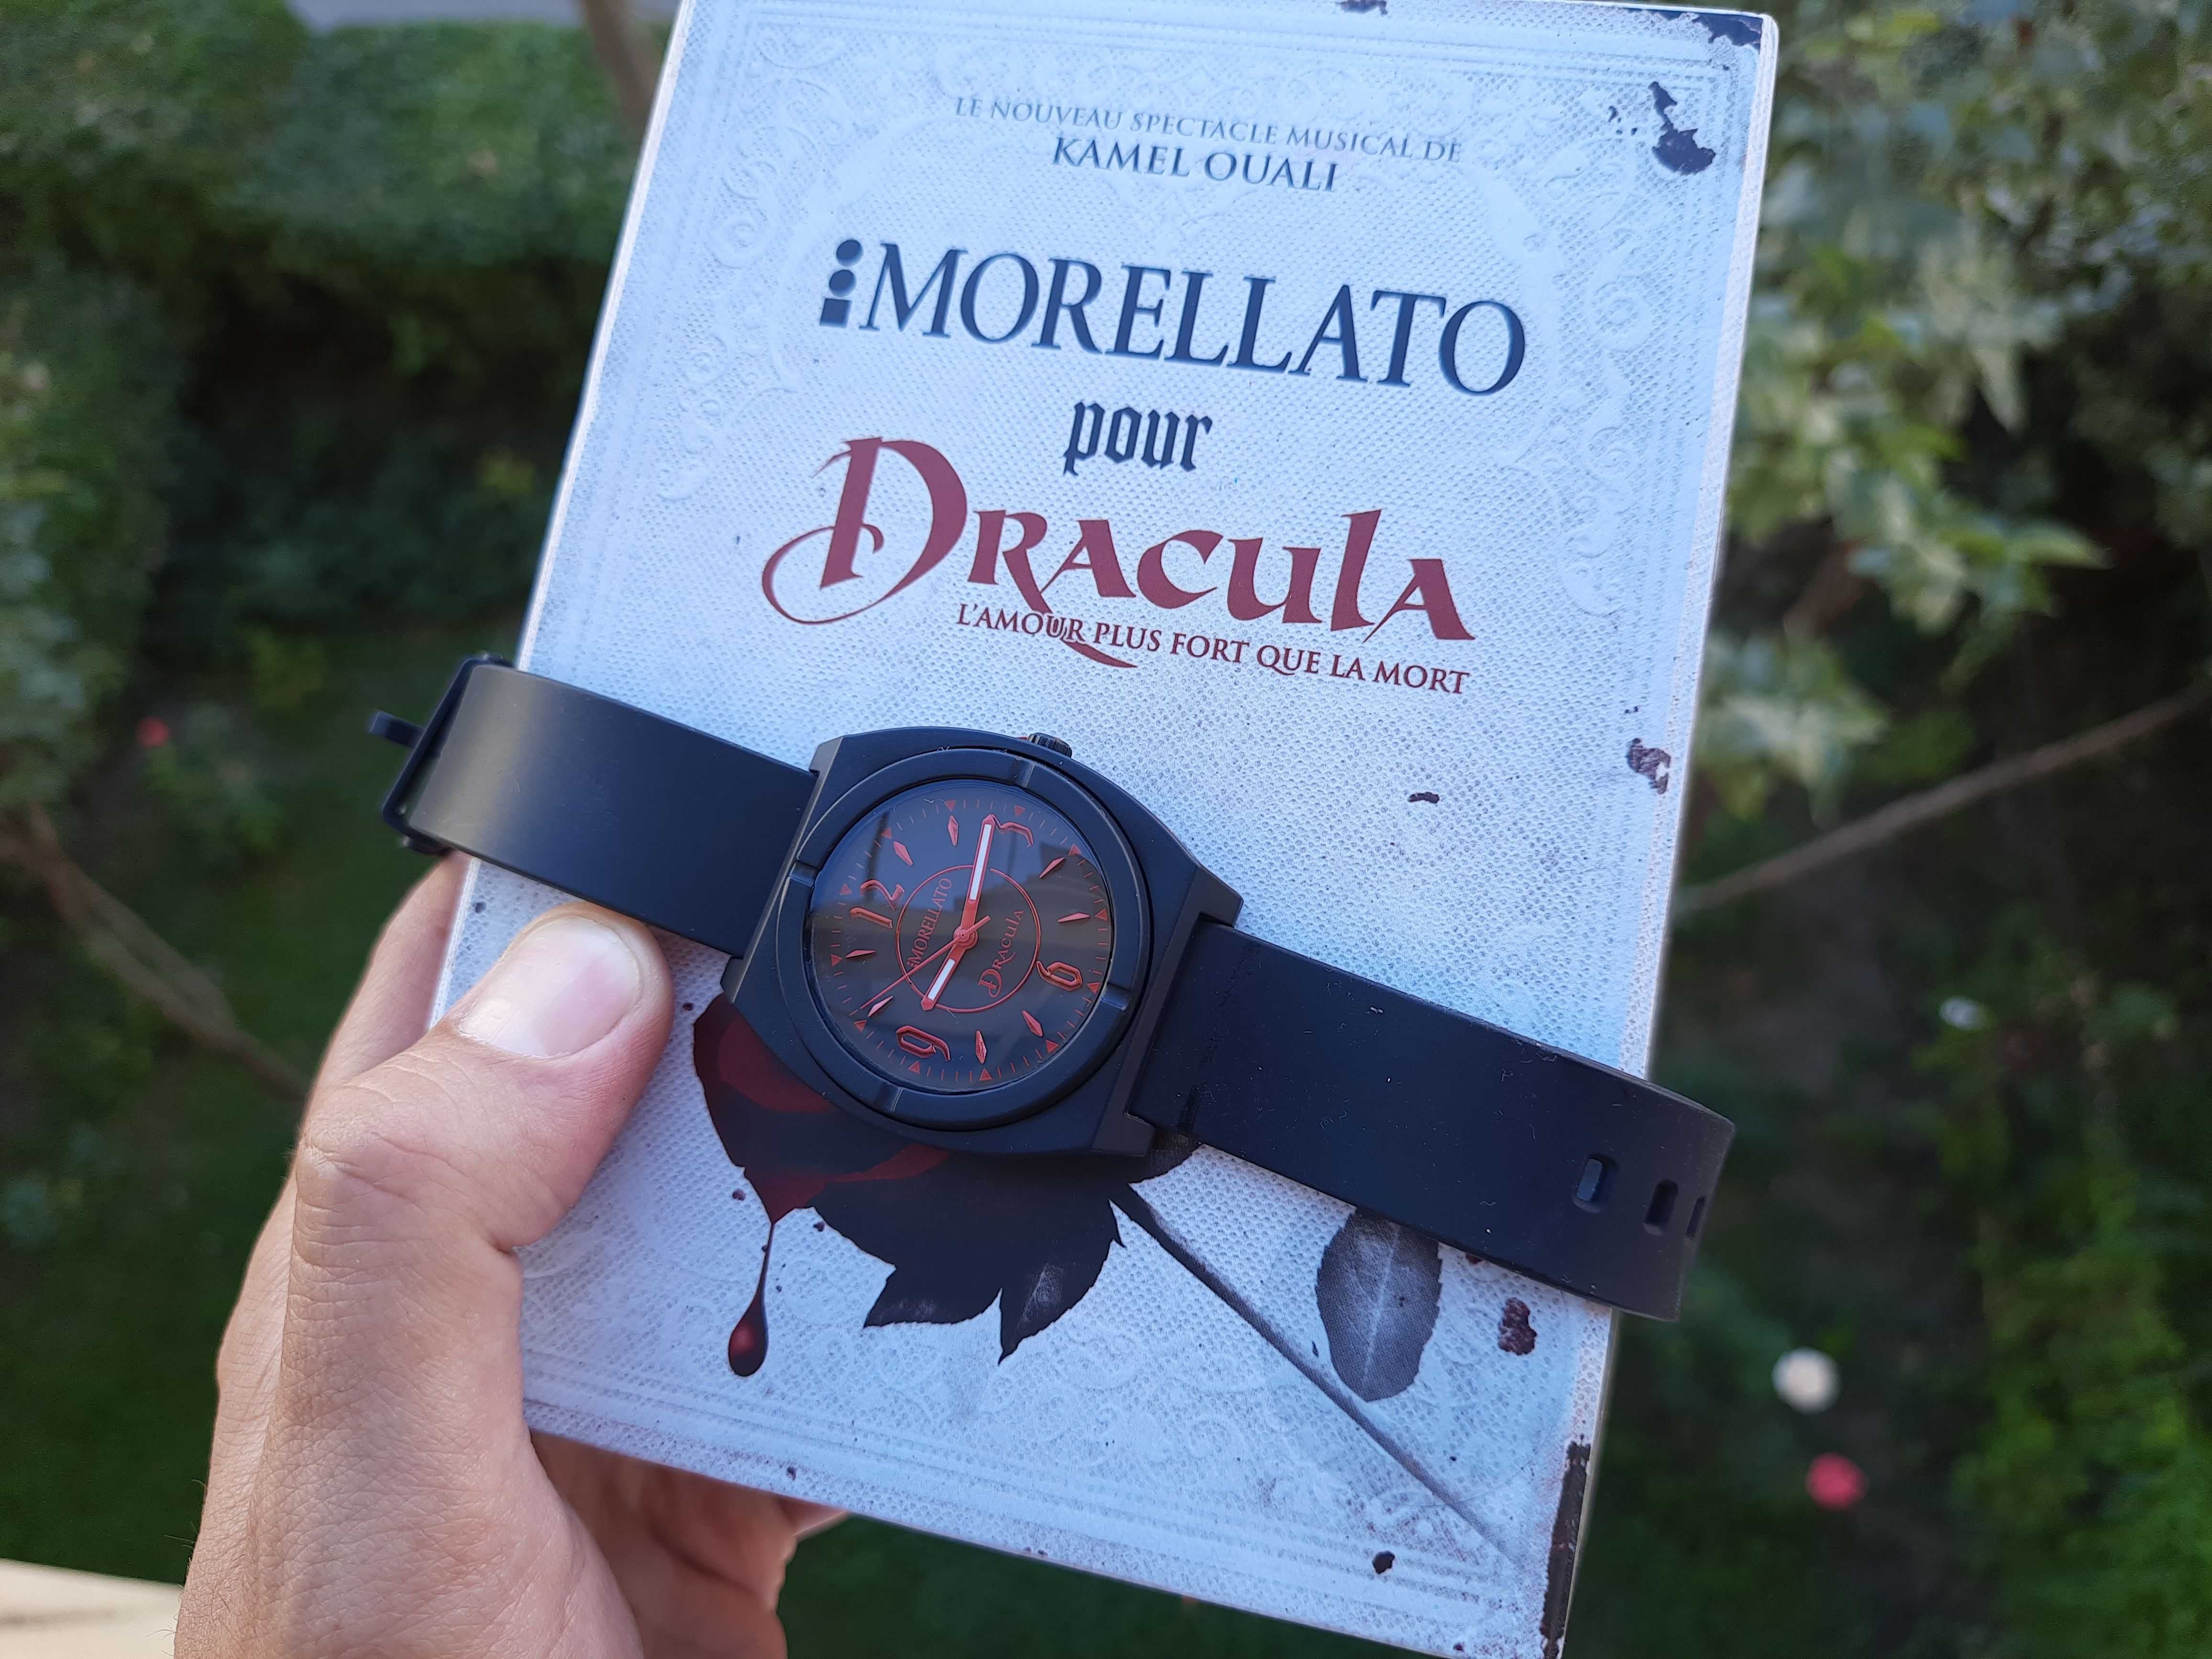 Ceas unisex - Morellato - Dracula